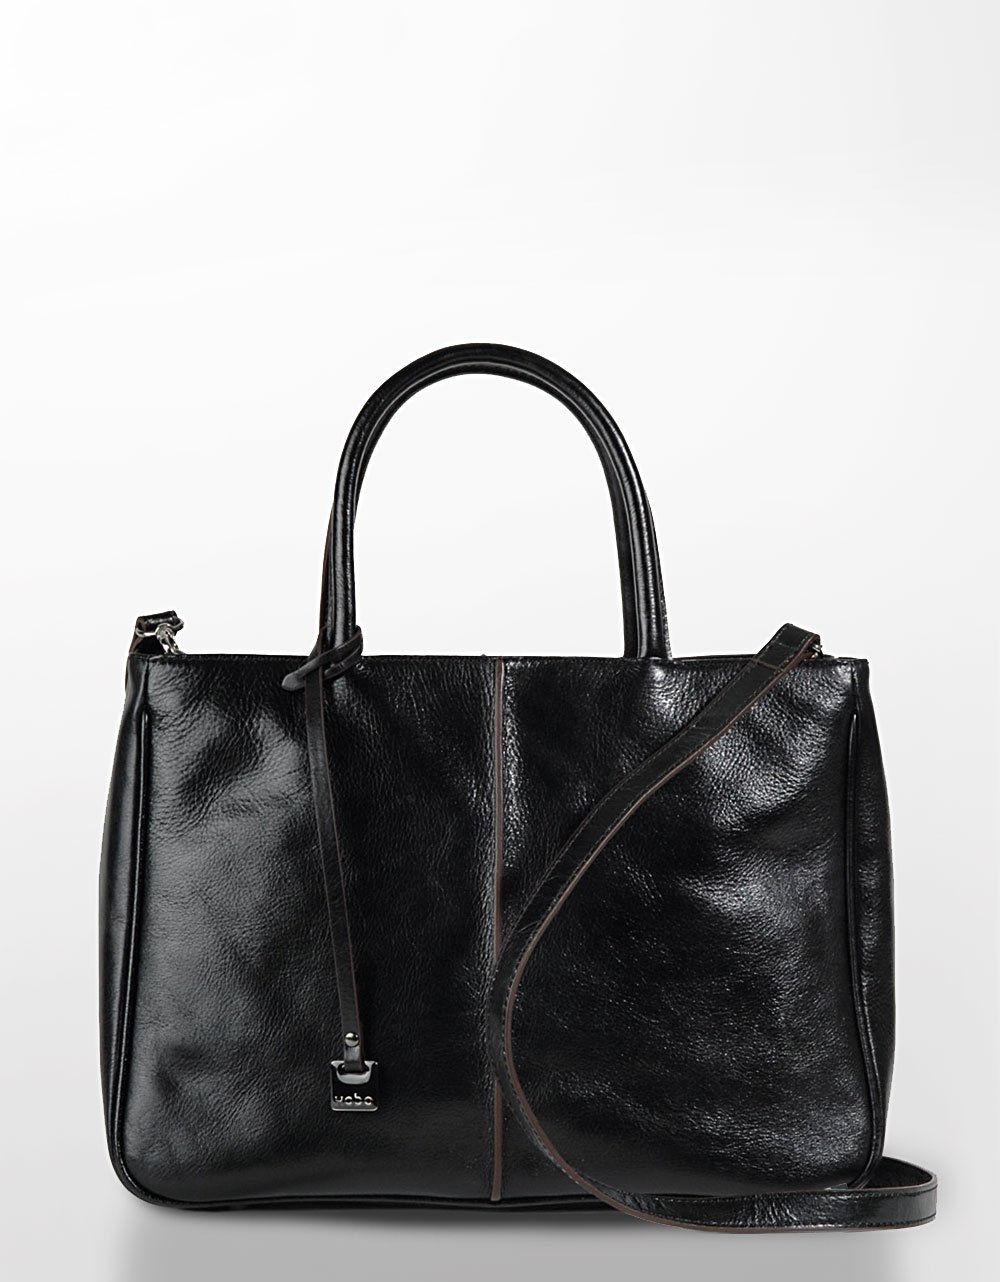 Hobo international Mariella Leather Tote Bag in Black | Lyst